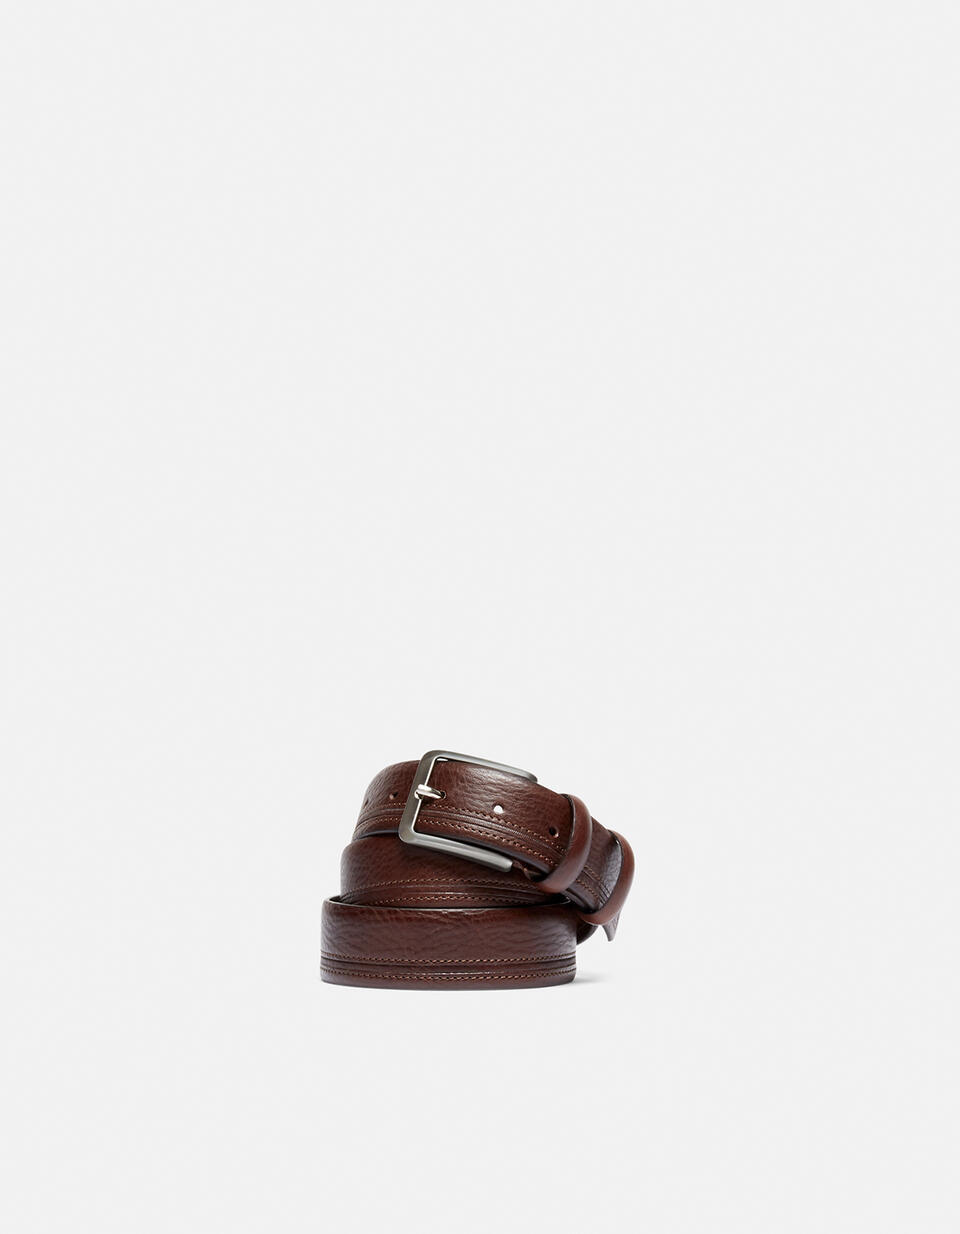 Cintura cucitura laterale 3,5 cm Testa di moro  - Cinture Uomo - Cinture - Cuoieria Fiorentina